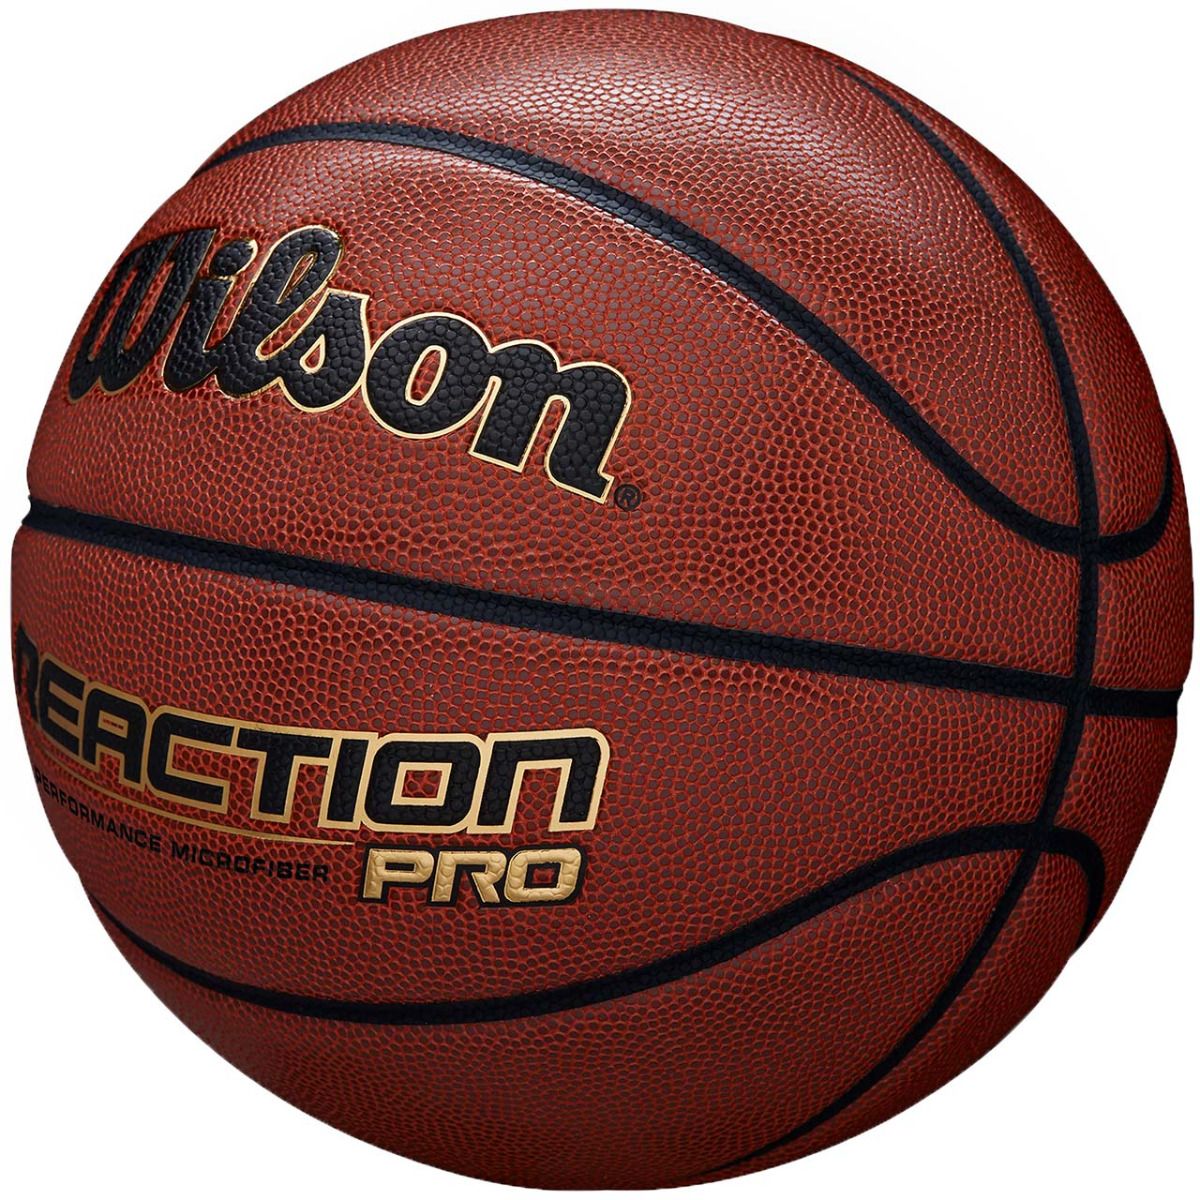 Wilson Piłka koszykowa Reaction Pro 295 WTB10137XB07